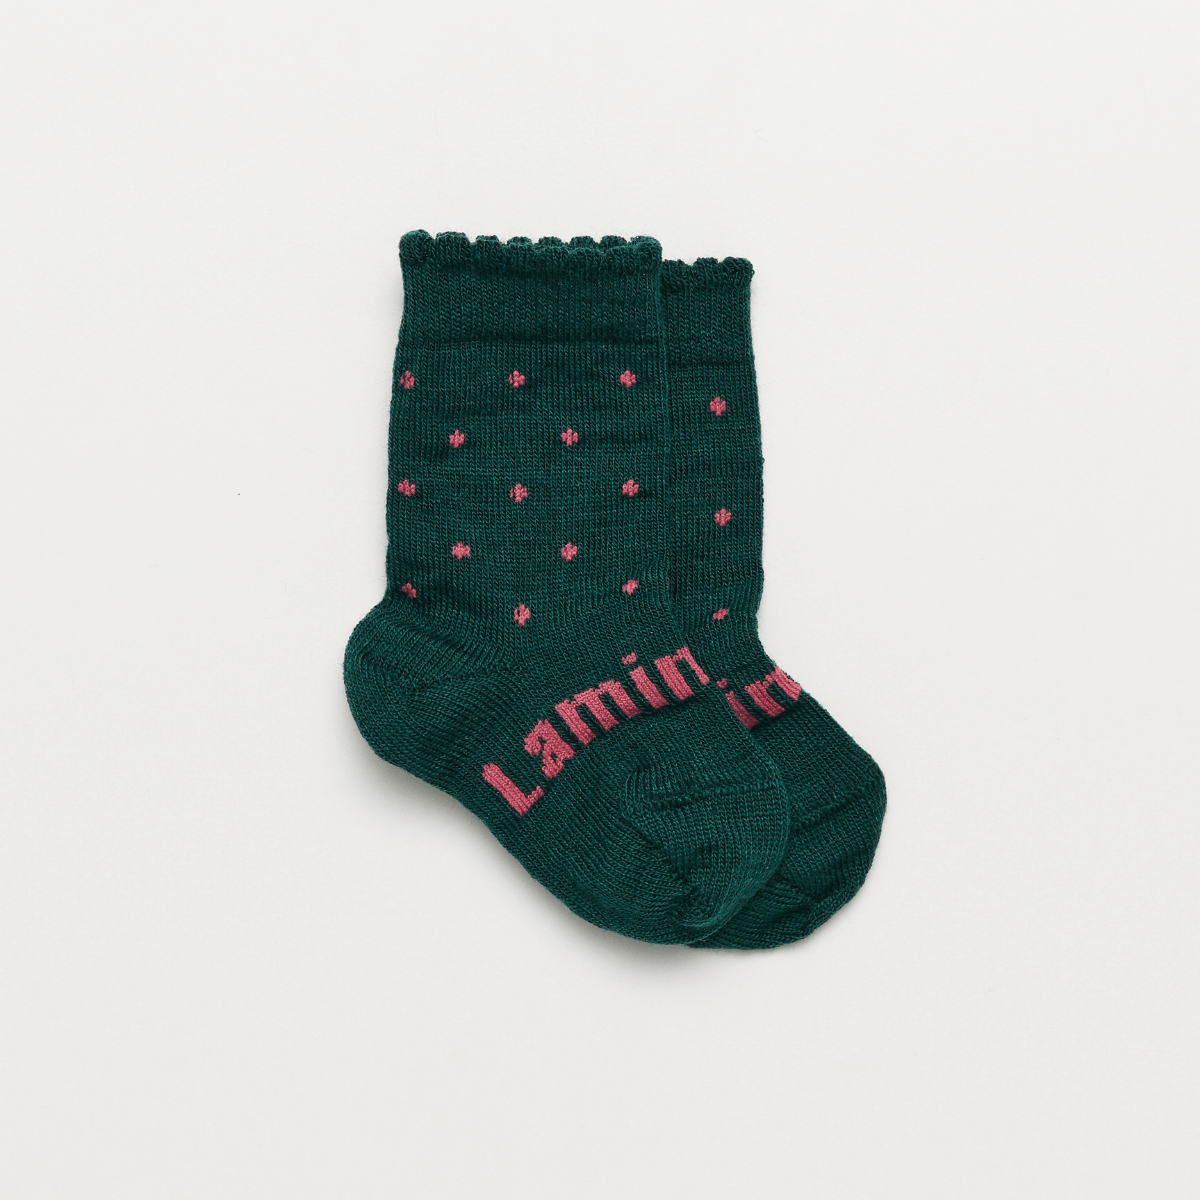 merino wool baby socks green and pink